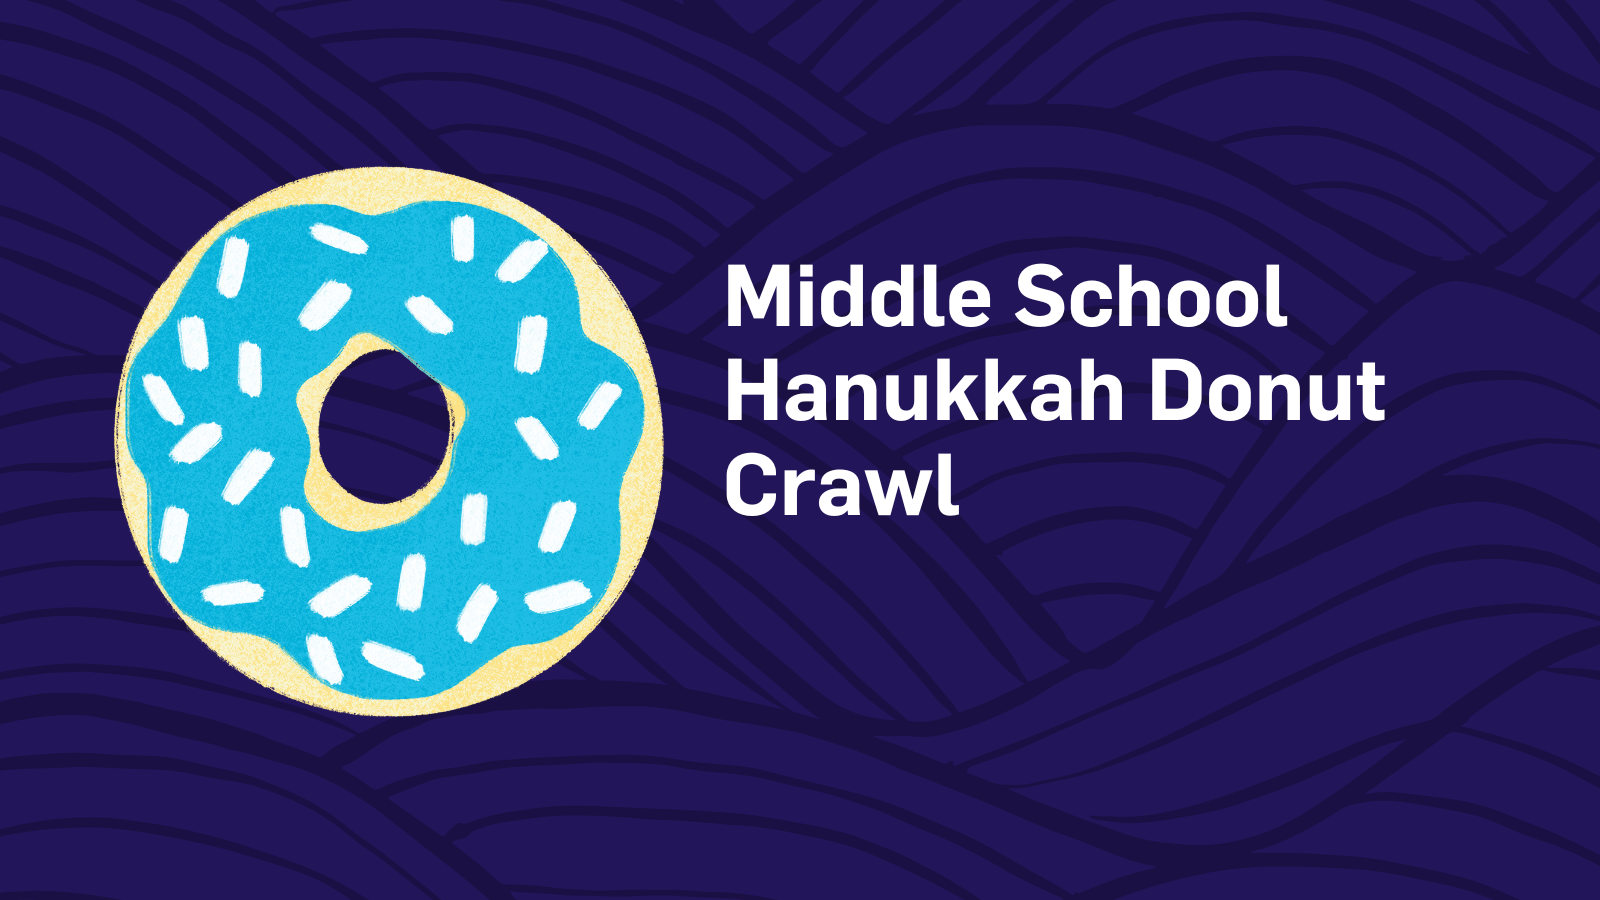 Middle School Hanukkah Donut Crawl